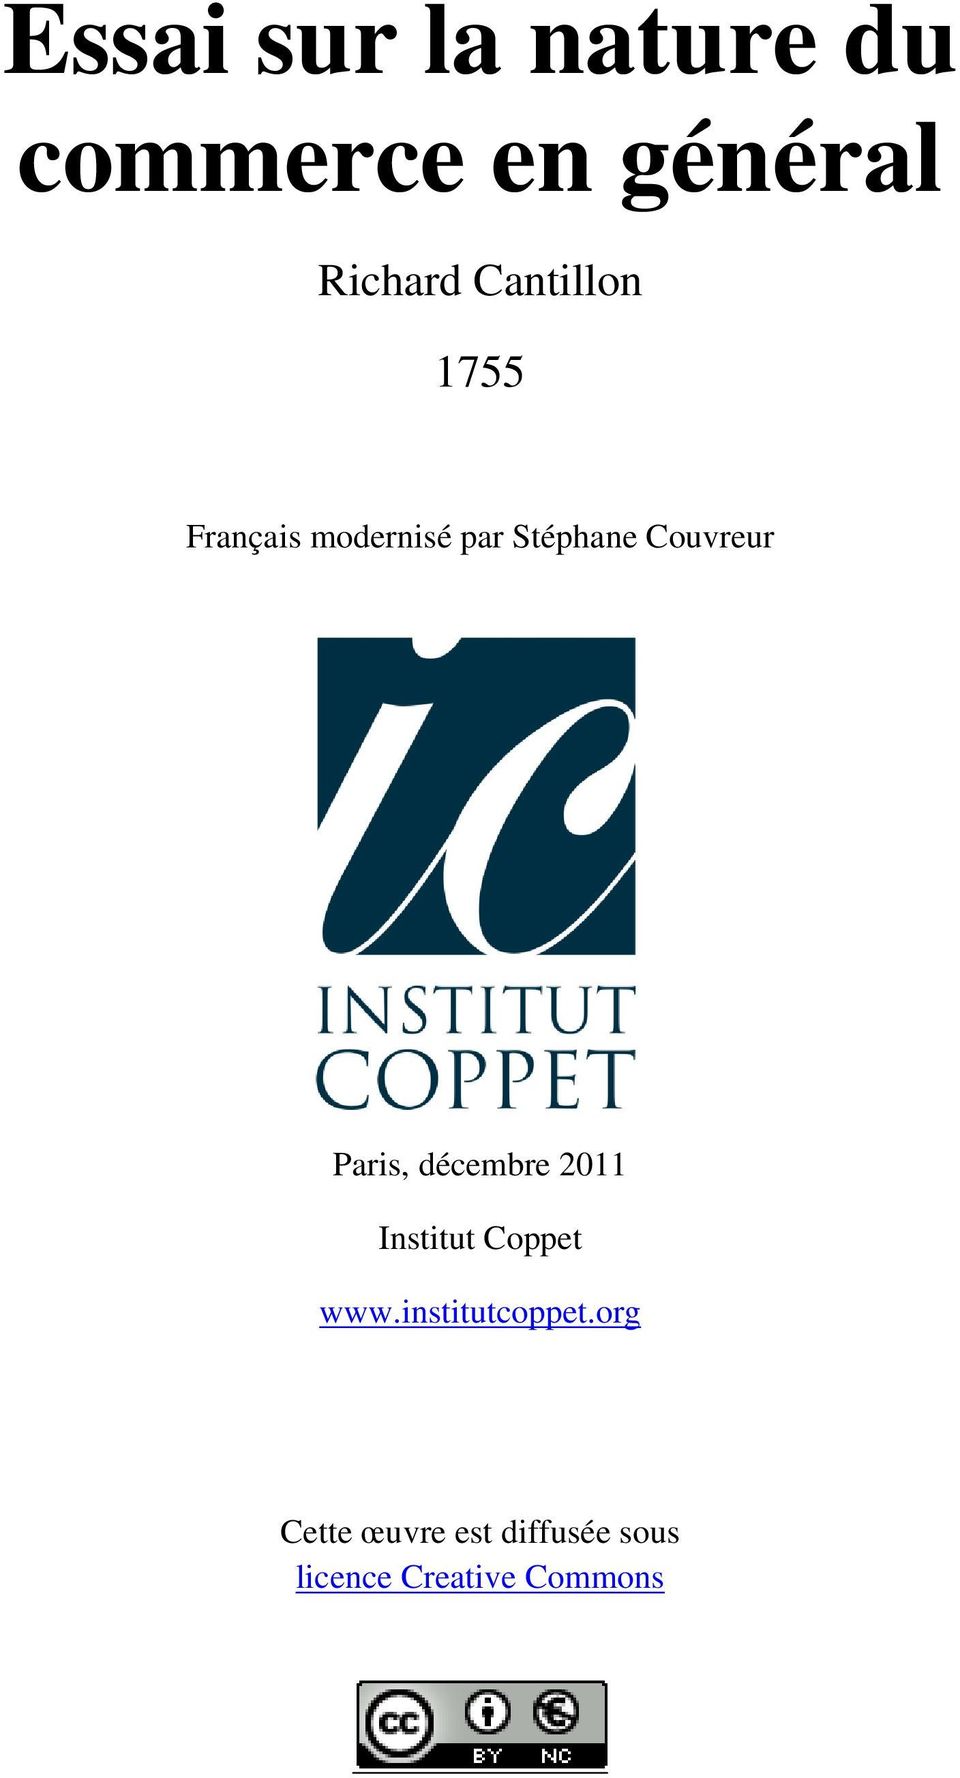 Paris, décembre 2011 Institut Coppet www.institutcoppet.